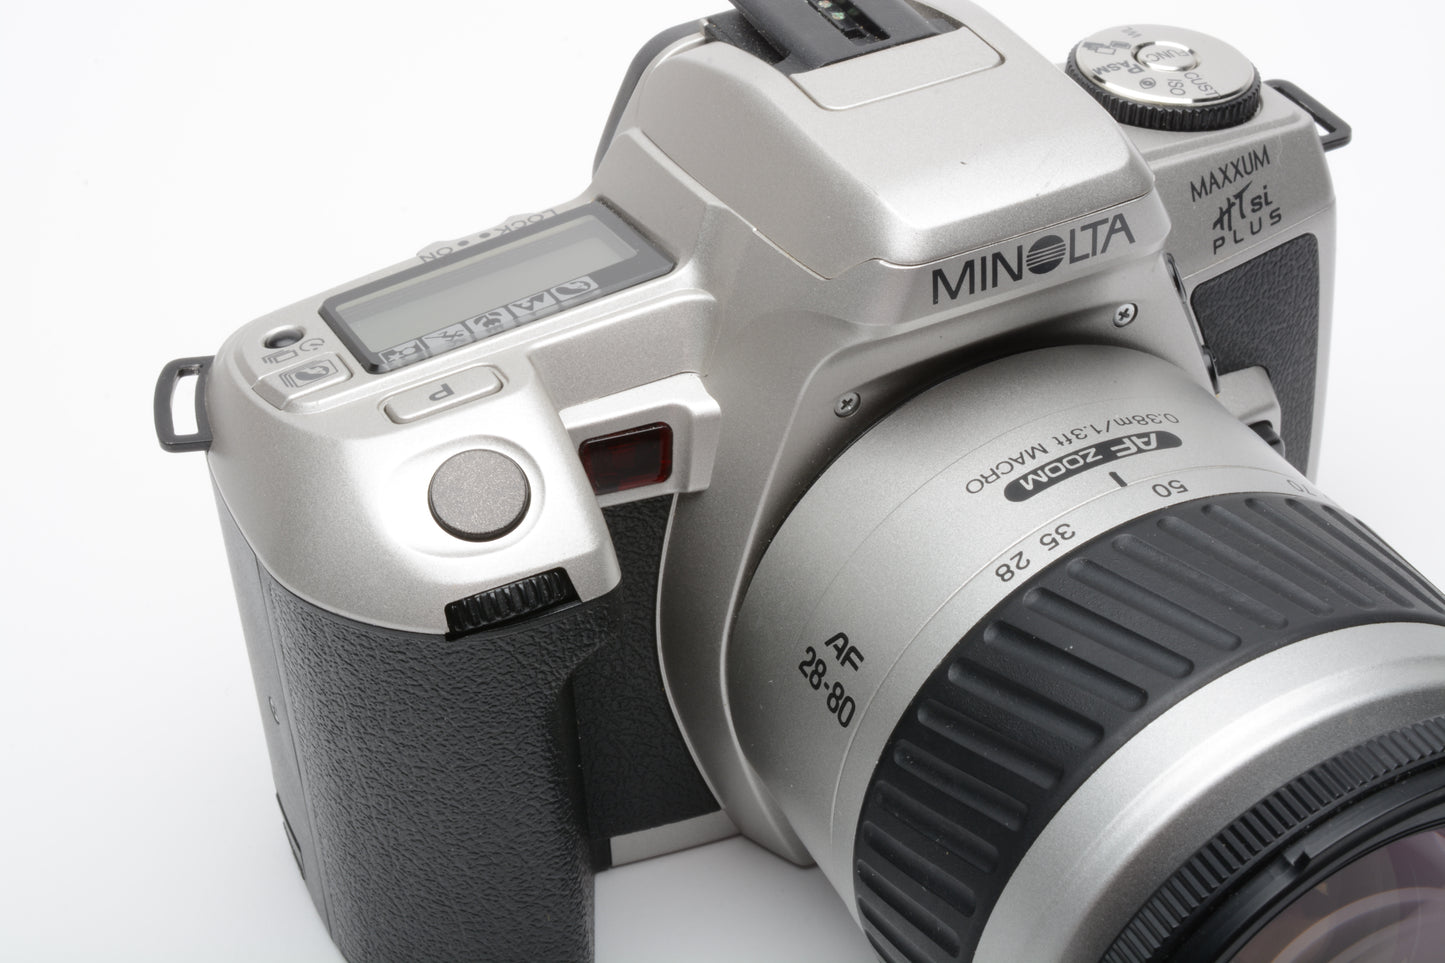 Minolta Maxxum HTsi Plus 35mm SLR w/AF 28-80mm f3.5-5.6 zoom, tested, strap, bargain